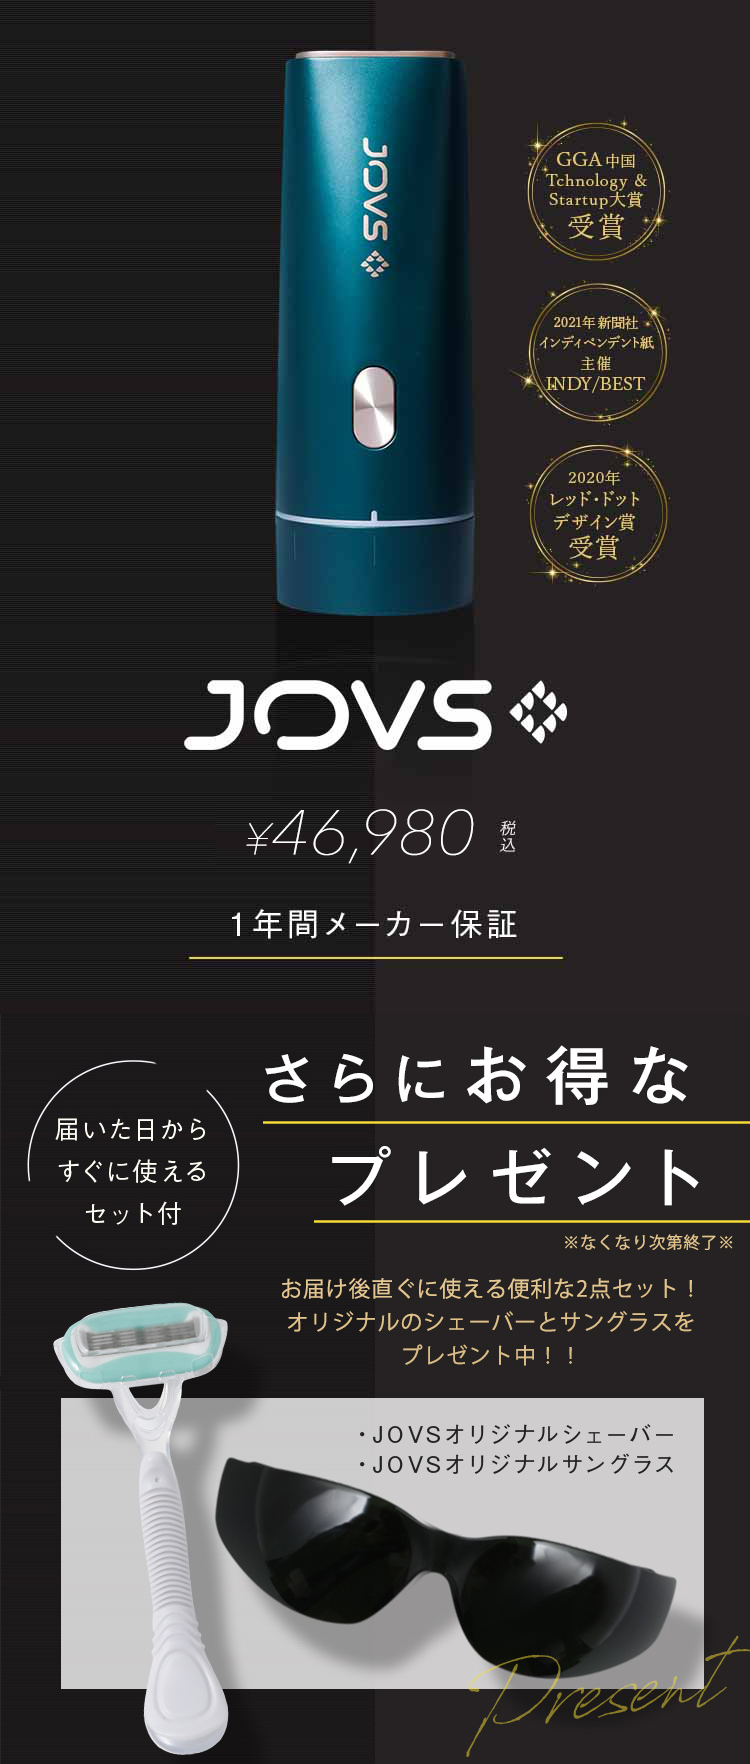 JOVS 公式 脱毛器 JOVS Dora 最新 ランキング1位 世界3冠 150万台超 顔